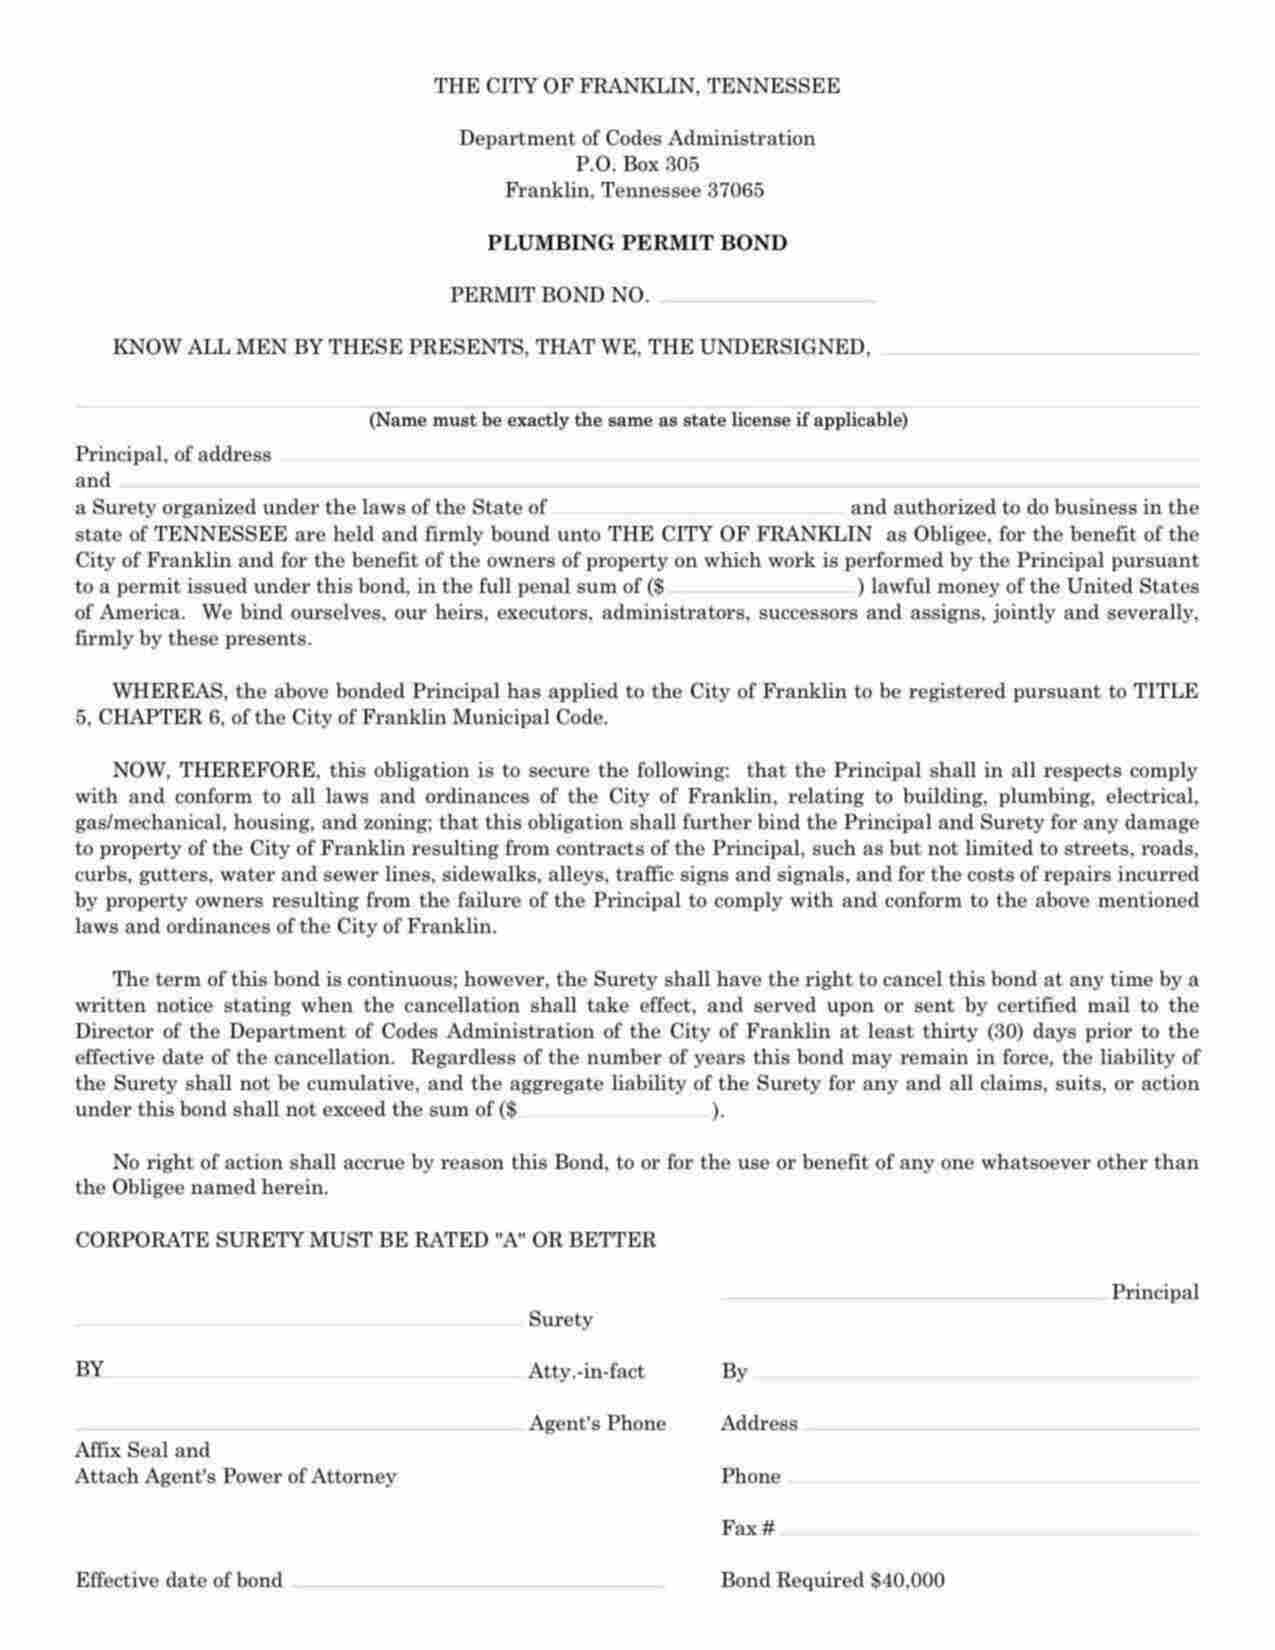 Tennessee Plumbing Permit Bond Form